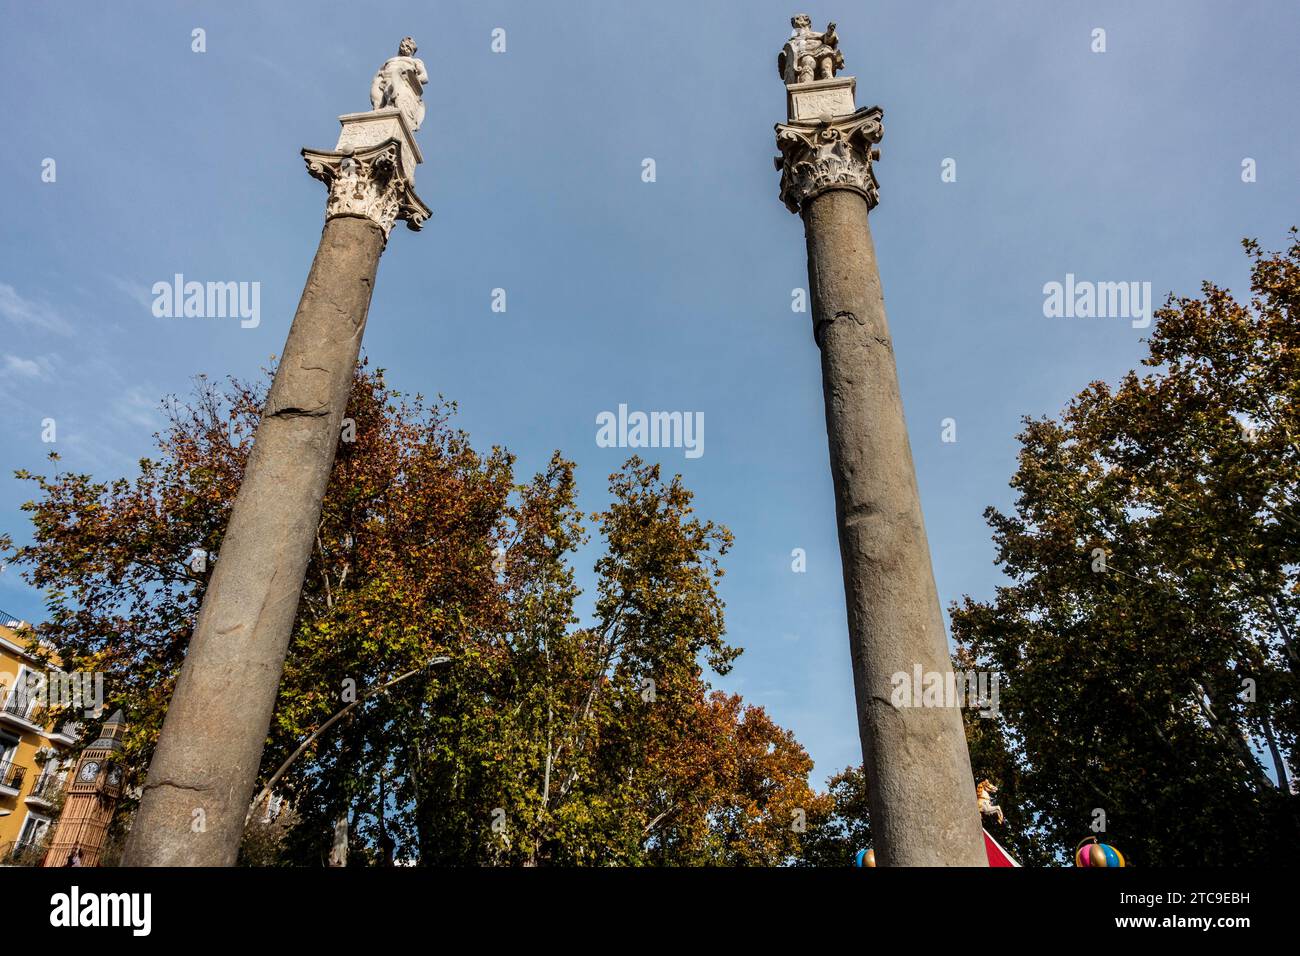 The majestic columns of Hercules and Julius Caesar in Plaza de la Alameda, Seville, Spain. Stock Photo